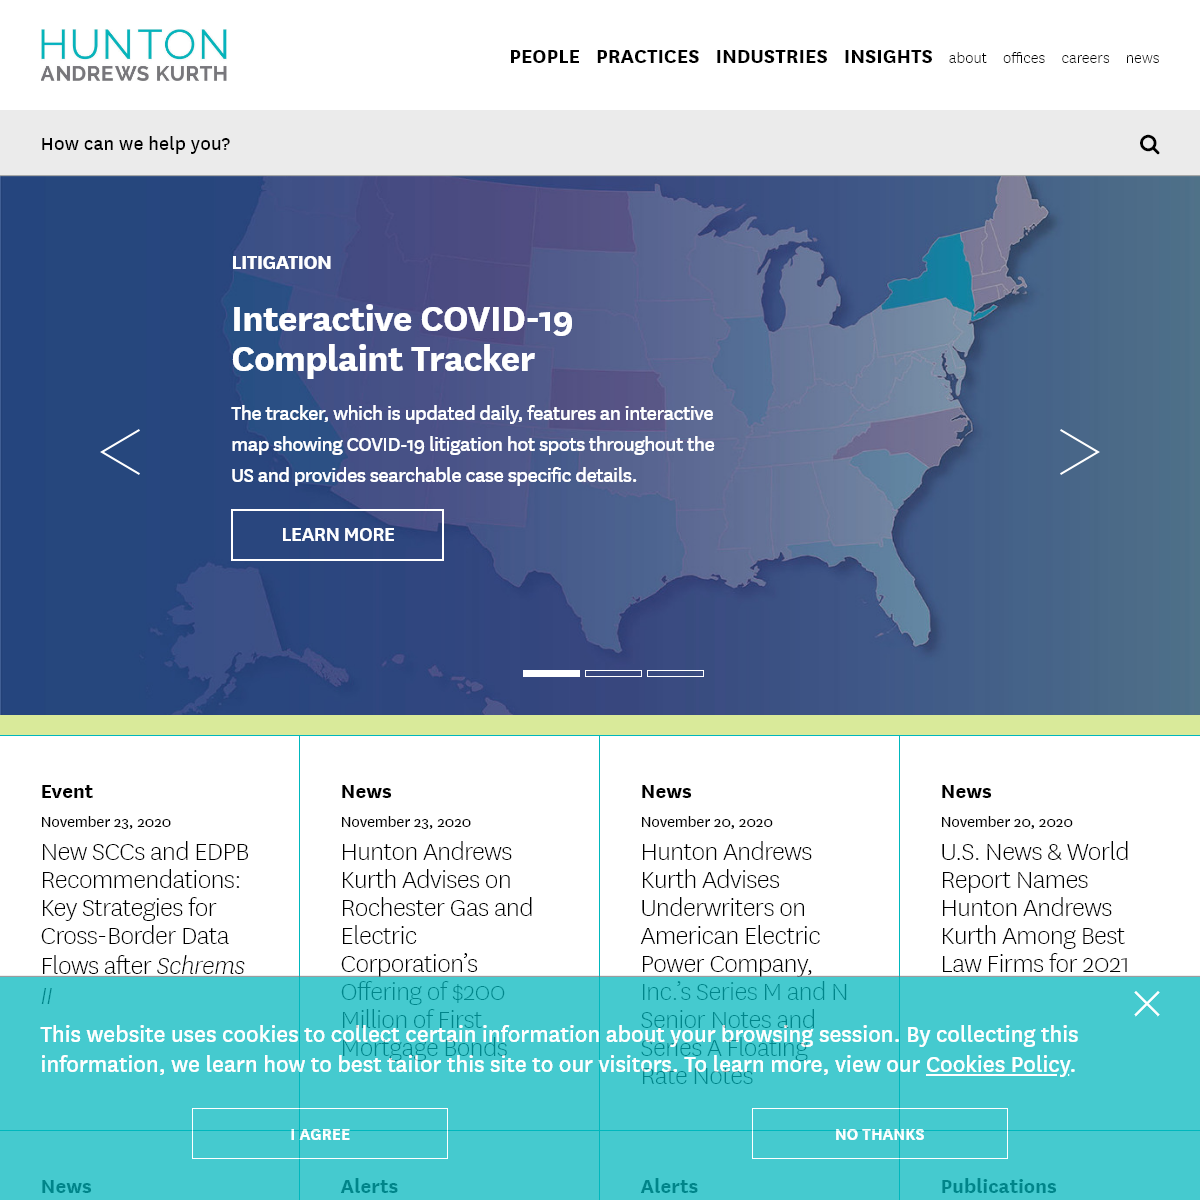 A complete backup of hunton.com